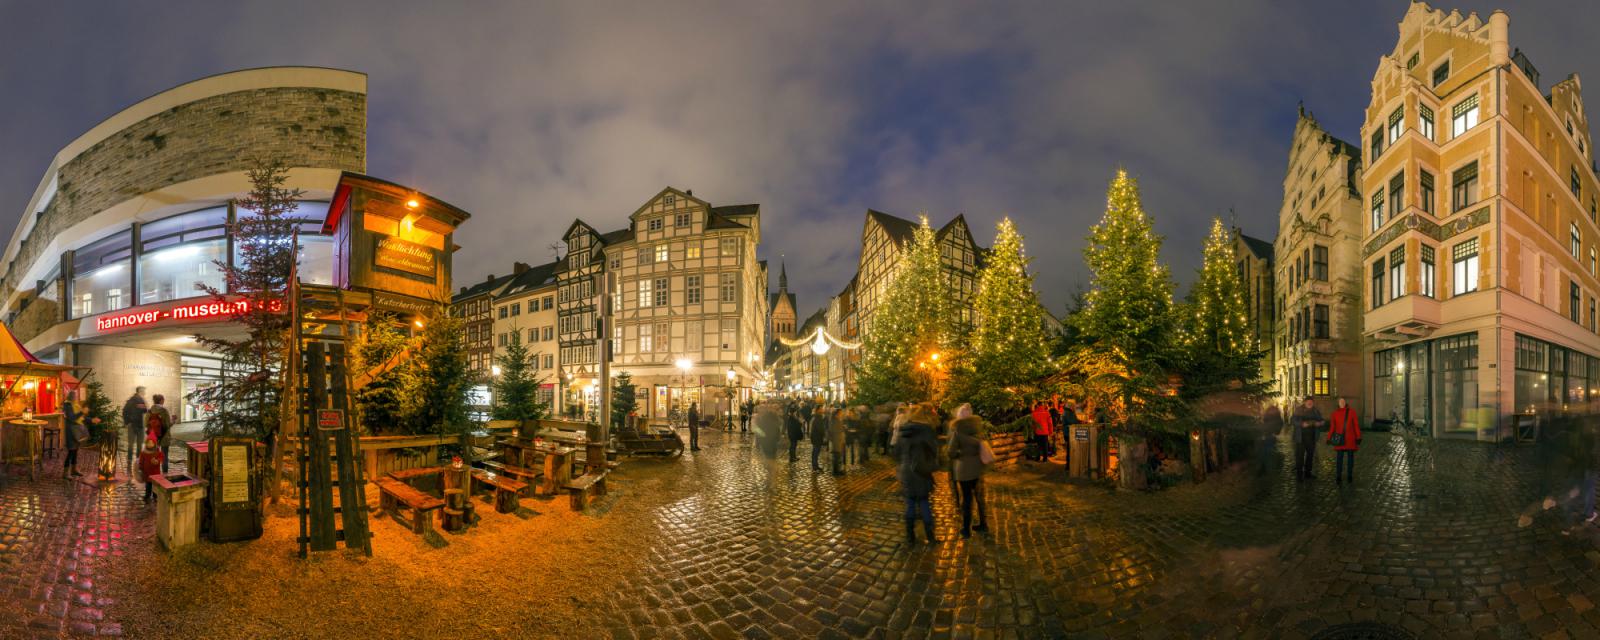 Kerstmarkten Special - Hannover 